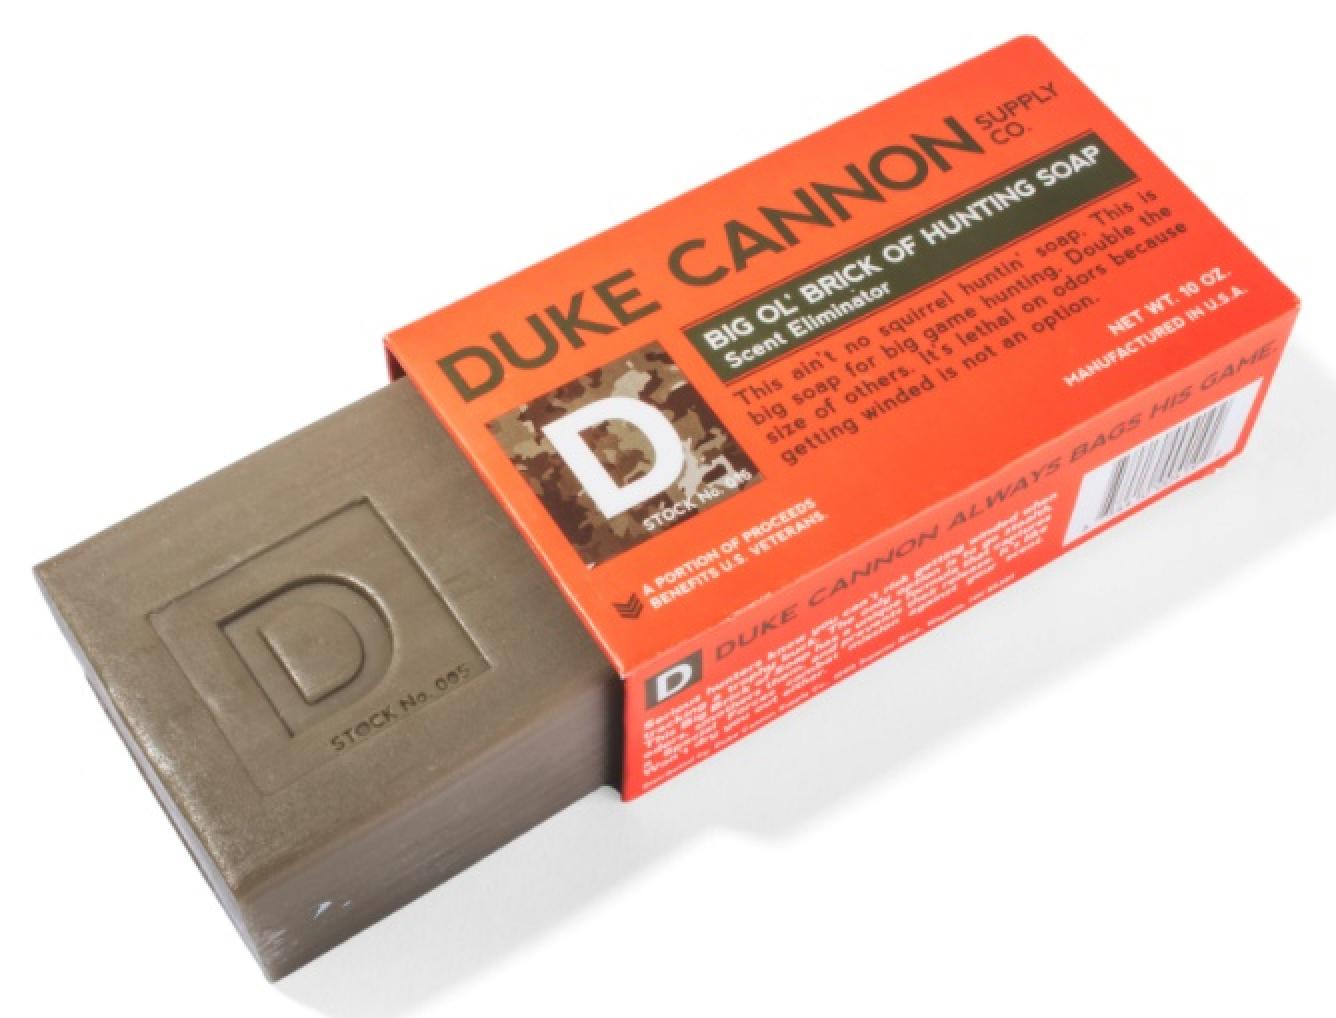 Duke Cannon Big ol' Brick of Hunting Soap